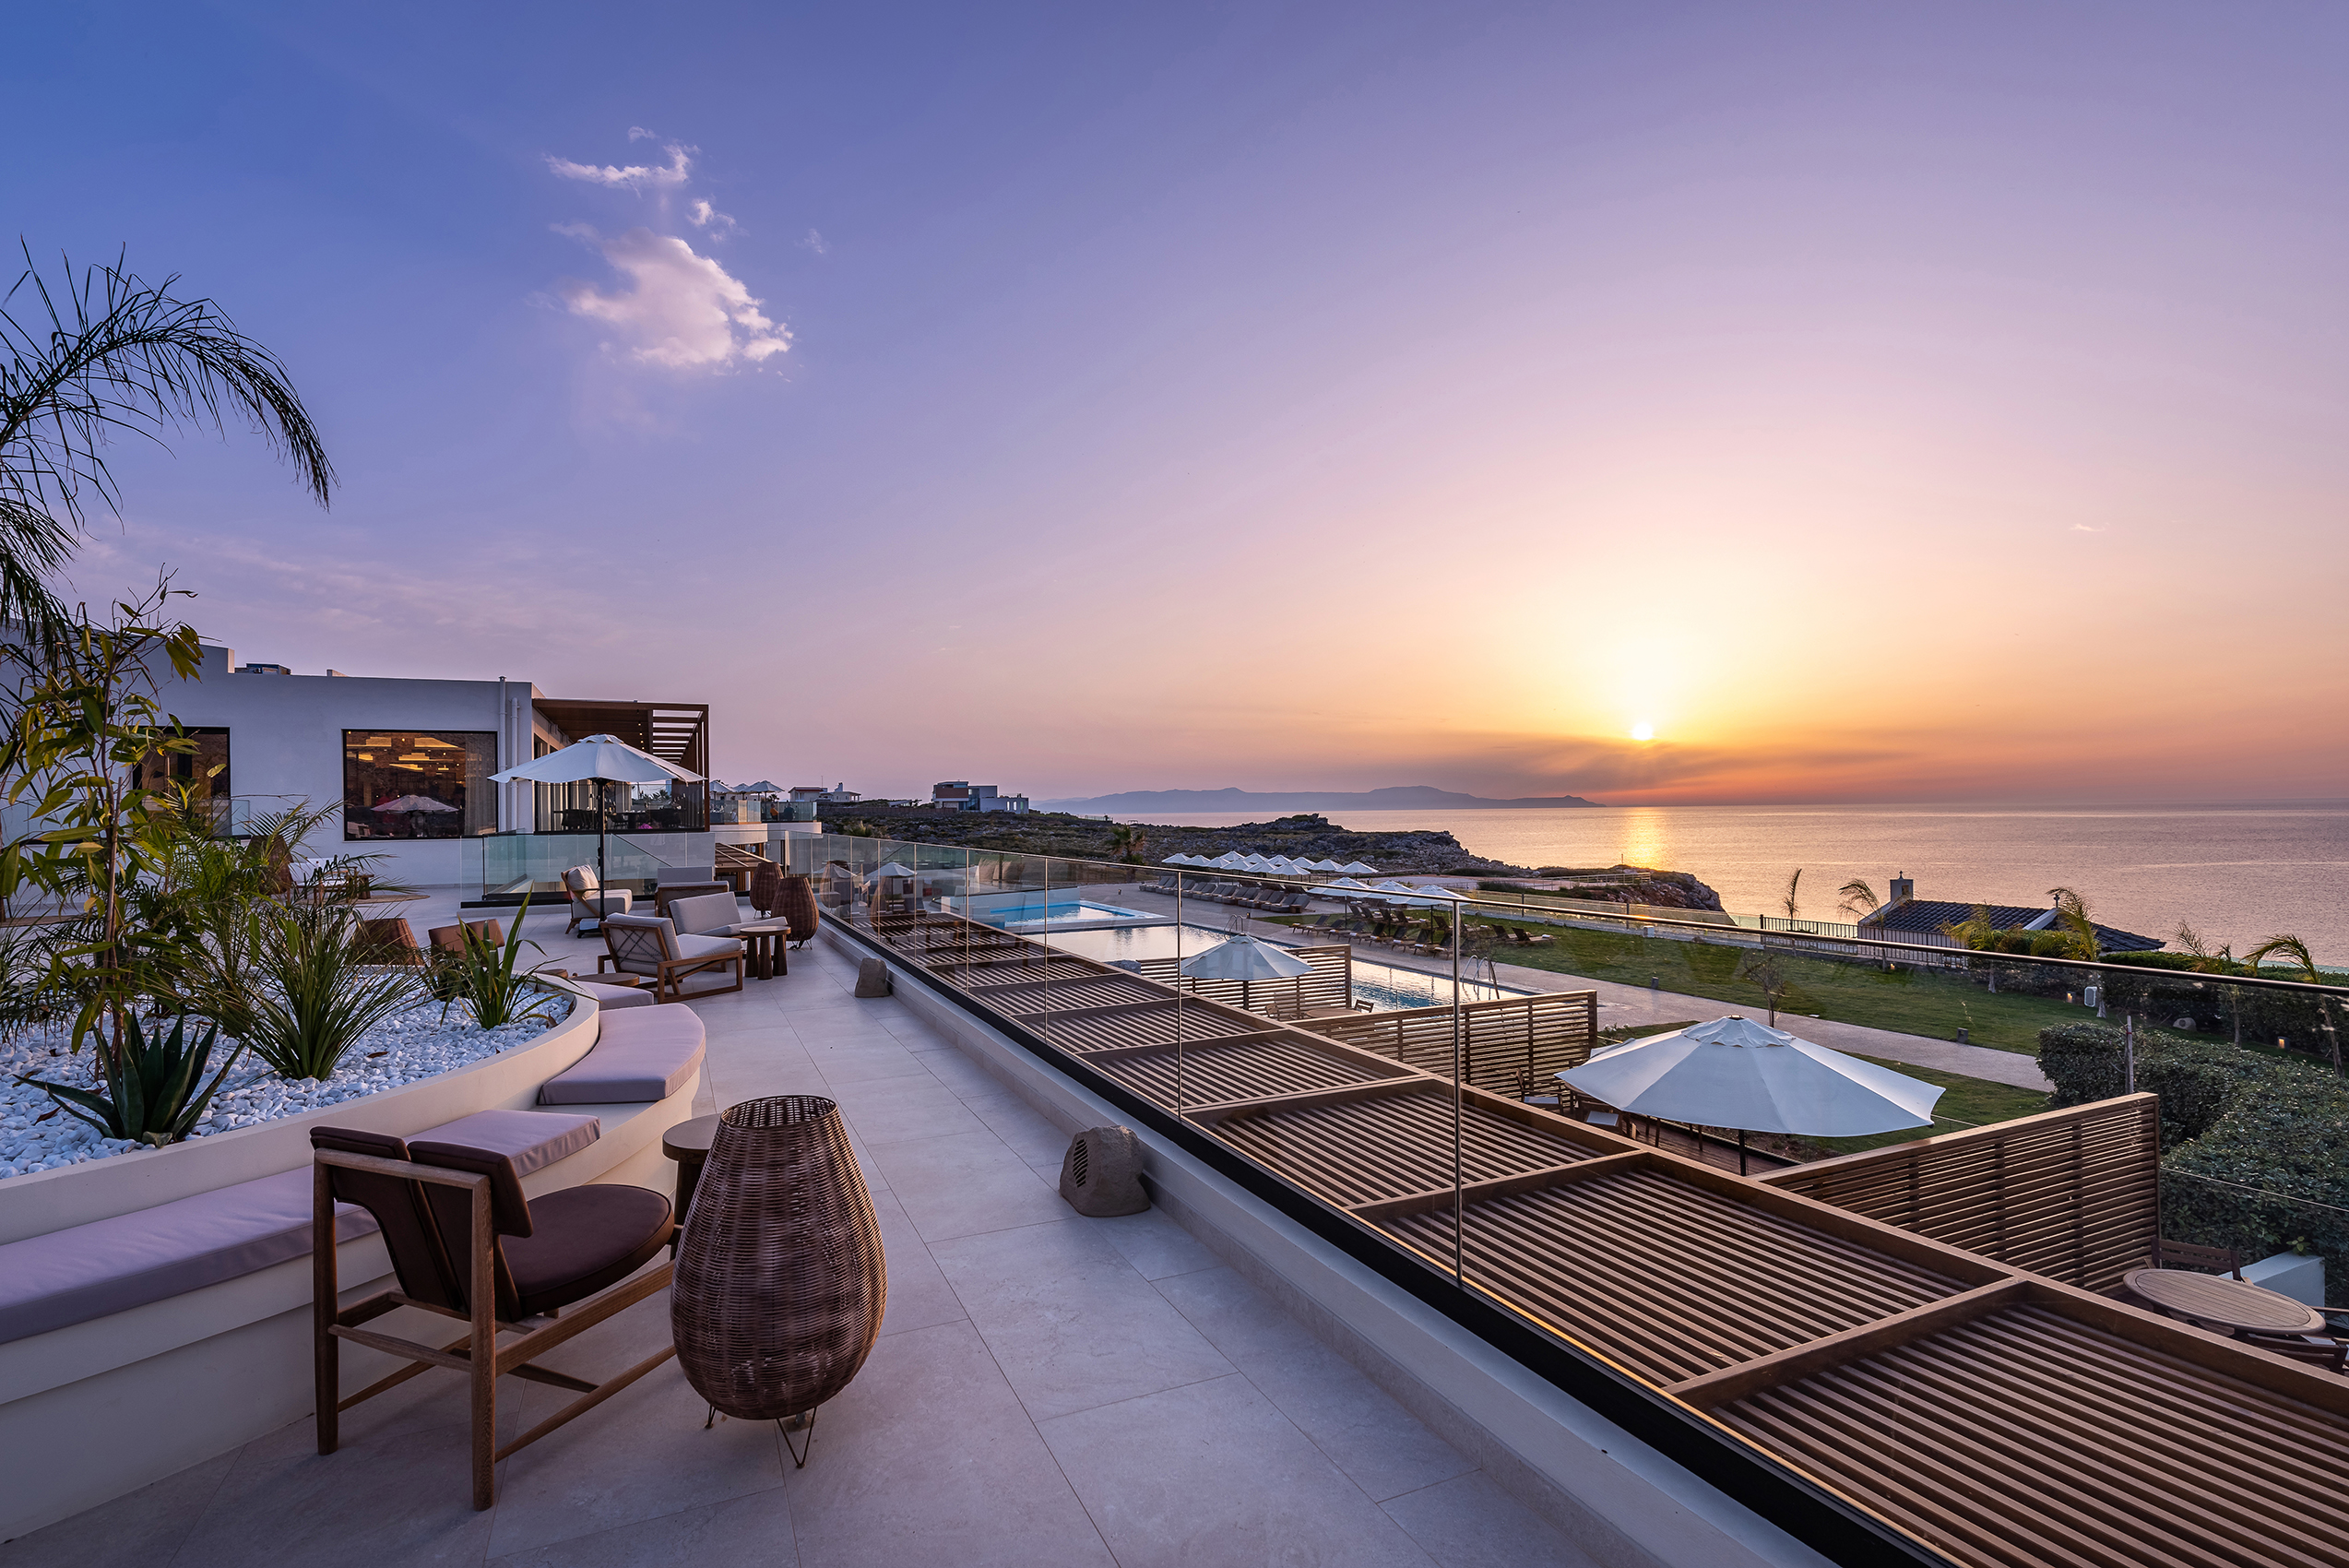 Brown Hotels: Επέκταση με νέα ξενοδοχεία σε Κέρκυρα, Κρήτη, Εύβοια – Η νέα στρατηγική αξιοποίησης ακινήτων